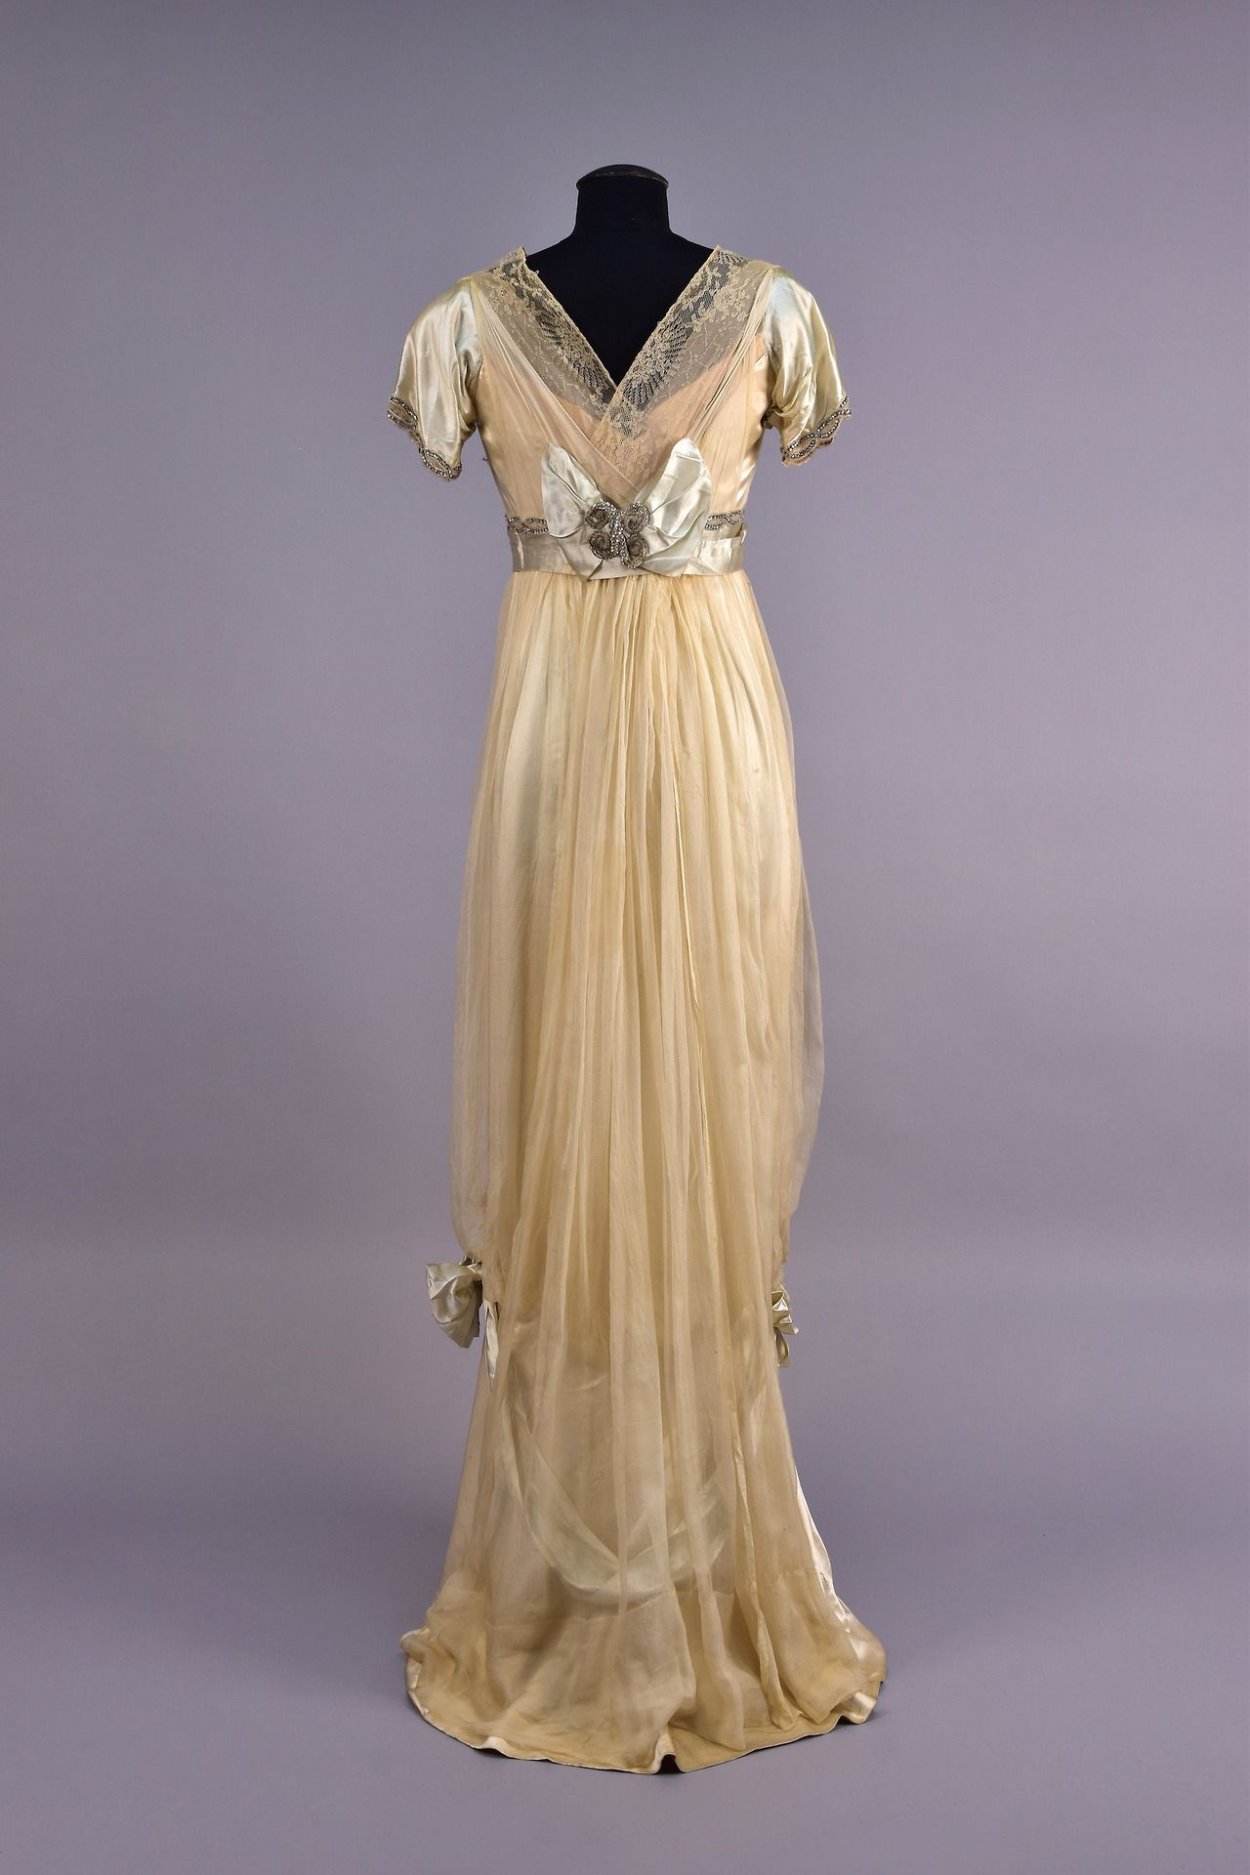 Dresses 1910s Style